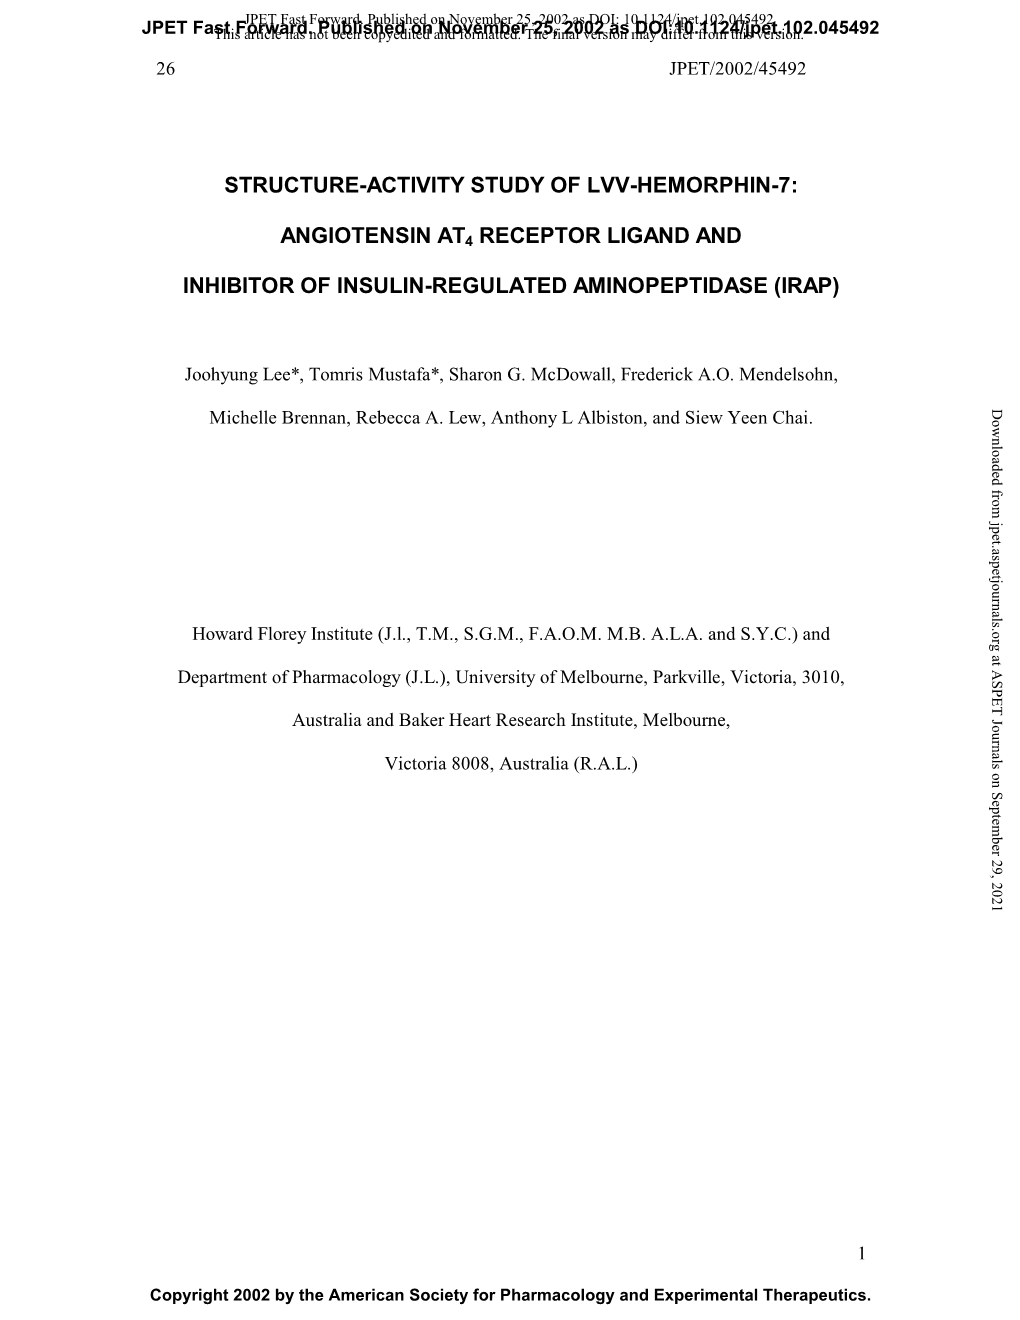 Structure-Activity Study of Lvv-Hemorphin-7